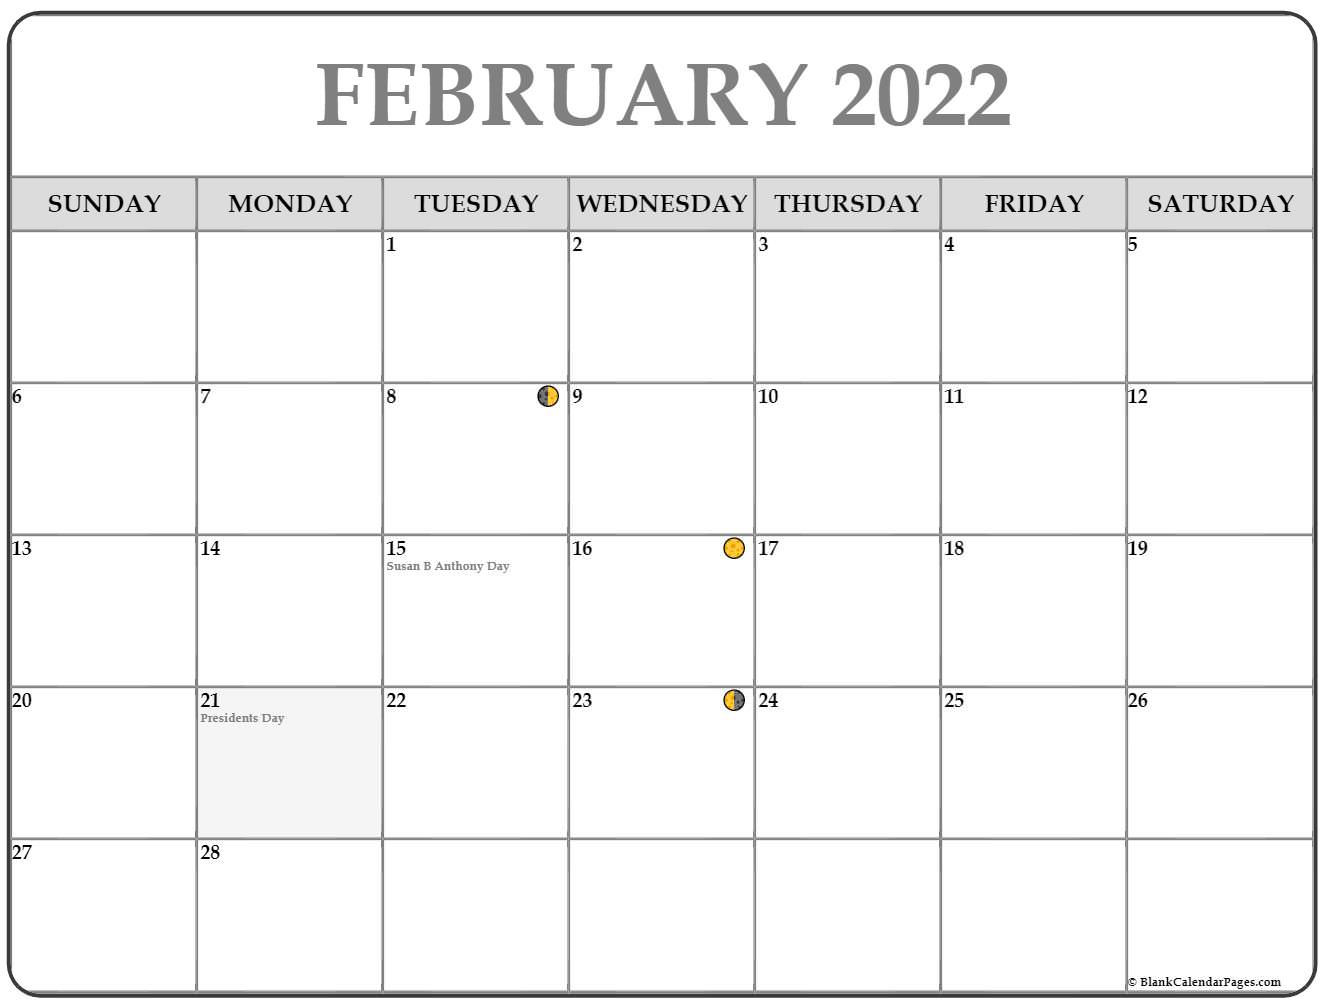 Moon Calendar February 2022 - Calendar 2022